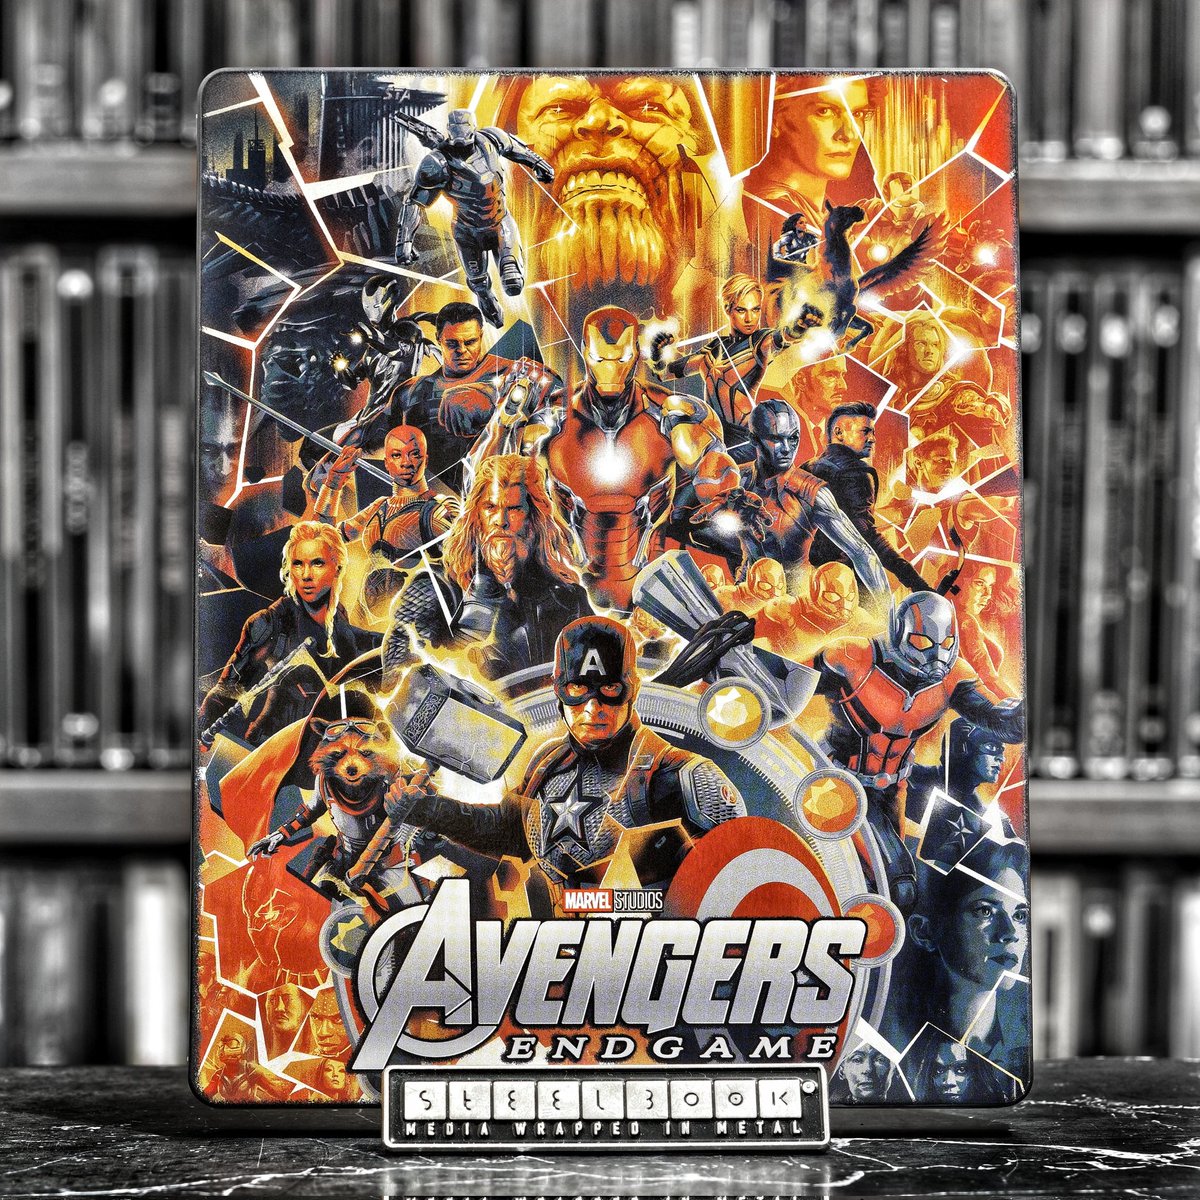 Avengers: Endgame [Mondo]

Finally some of the long awaited new MCU Mondo Steelbooks have arrived!

#avengers #avengersendgame #endgame #mondo #mondoart #mcu #steelbook #bluray #ironman  #spiderman #thor #captainamerica #artwork #mjolnir #thanos #infinitywar
#antman #hawkeye https://t.co/SlgGNKiWvN